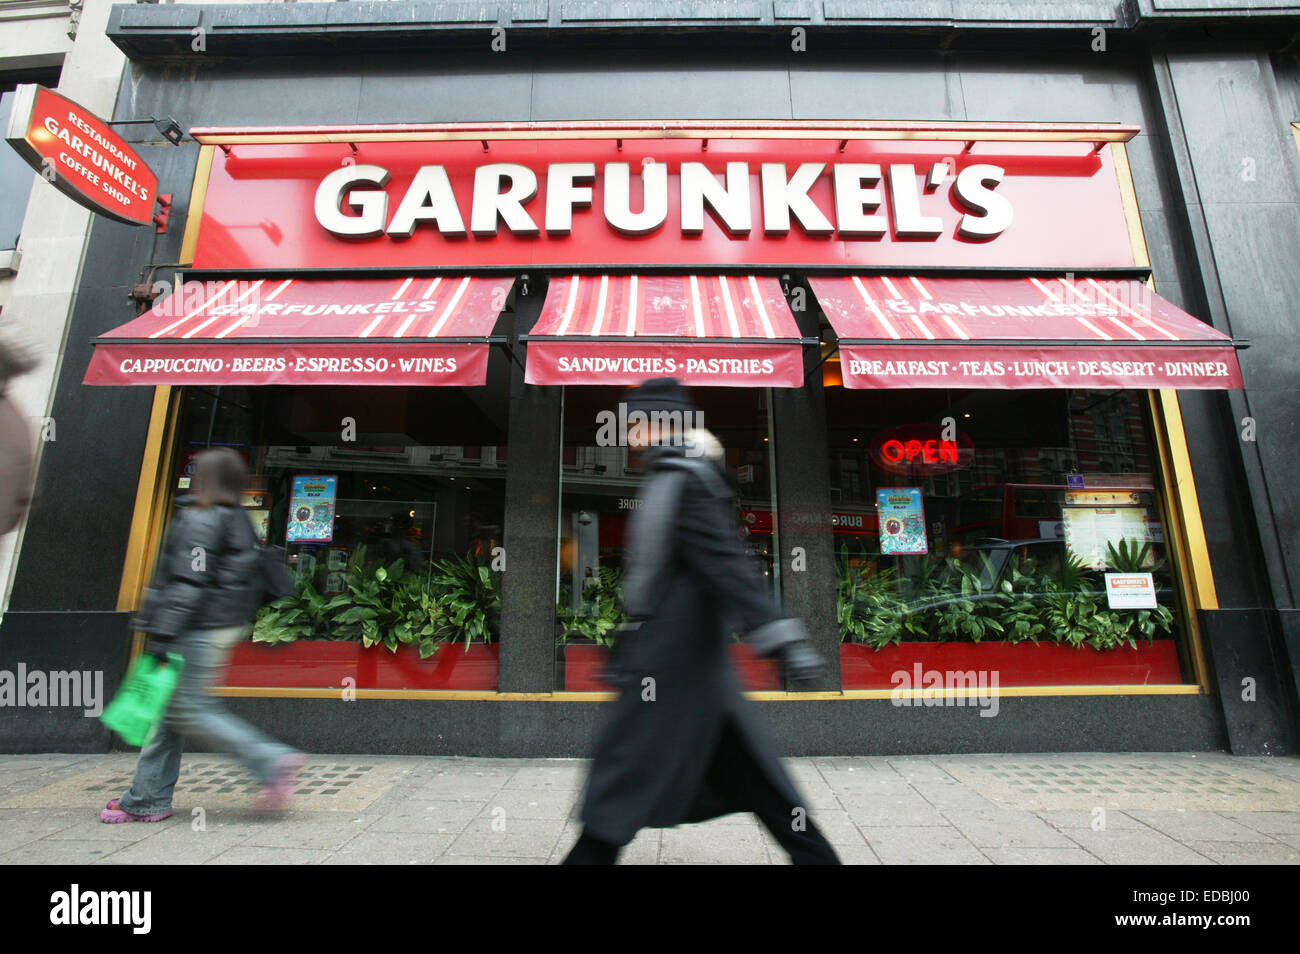 Exterior of a Garfunkel's Restaurant in London Stock Photo